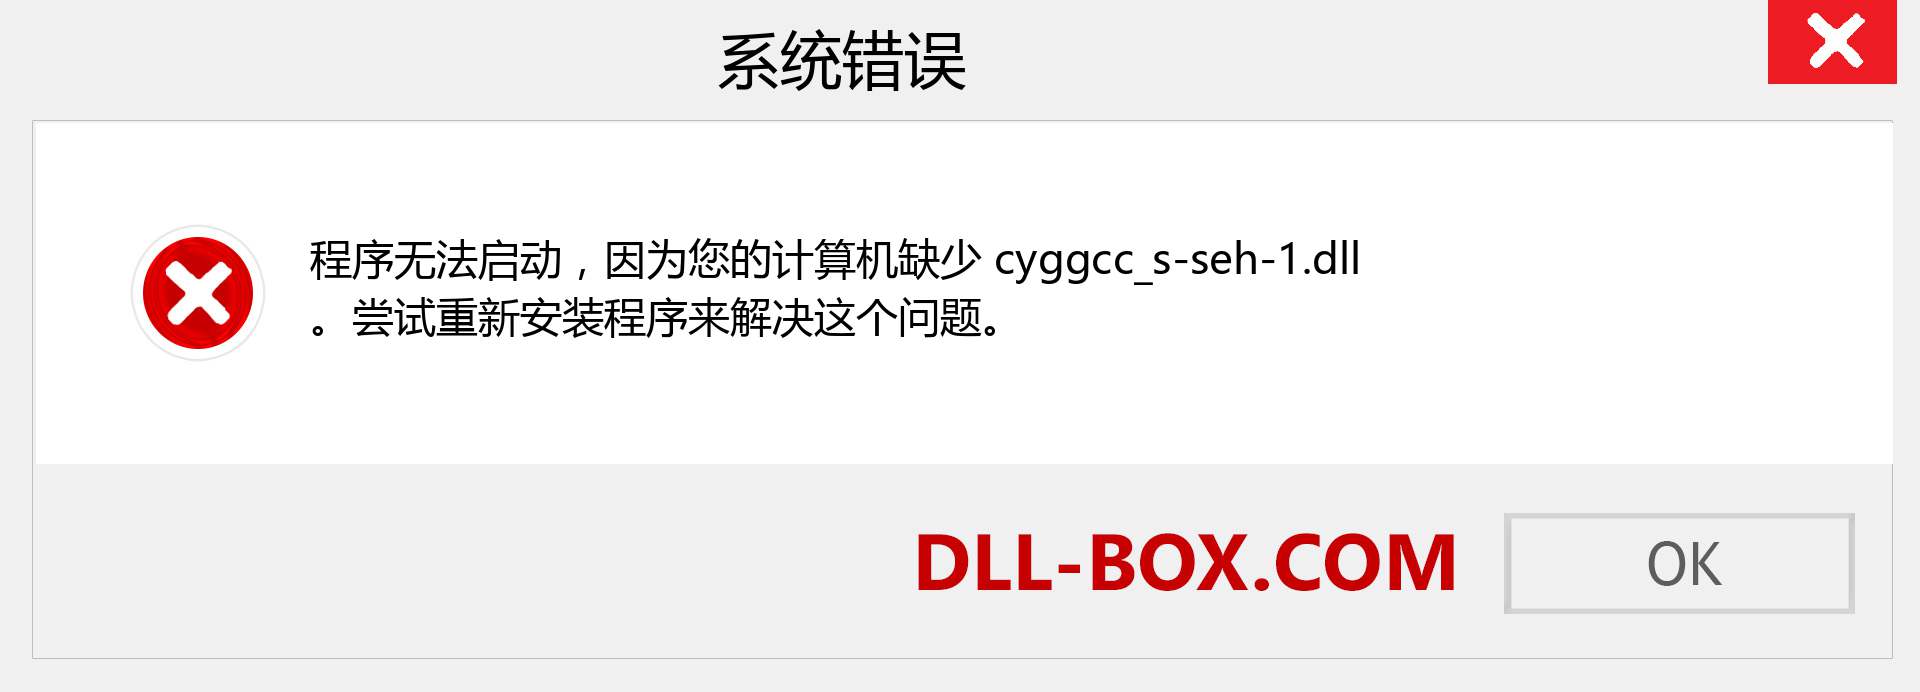 cyggcc_s-seh-1.dll 文件丢失？。 适用于 Windows 7、8、10 的下载 - 修复 Windows、照片、图像上的 cyggcc_s-seh-1 dll 丢失错误